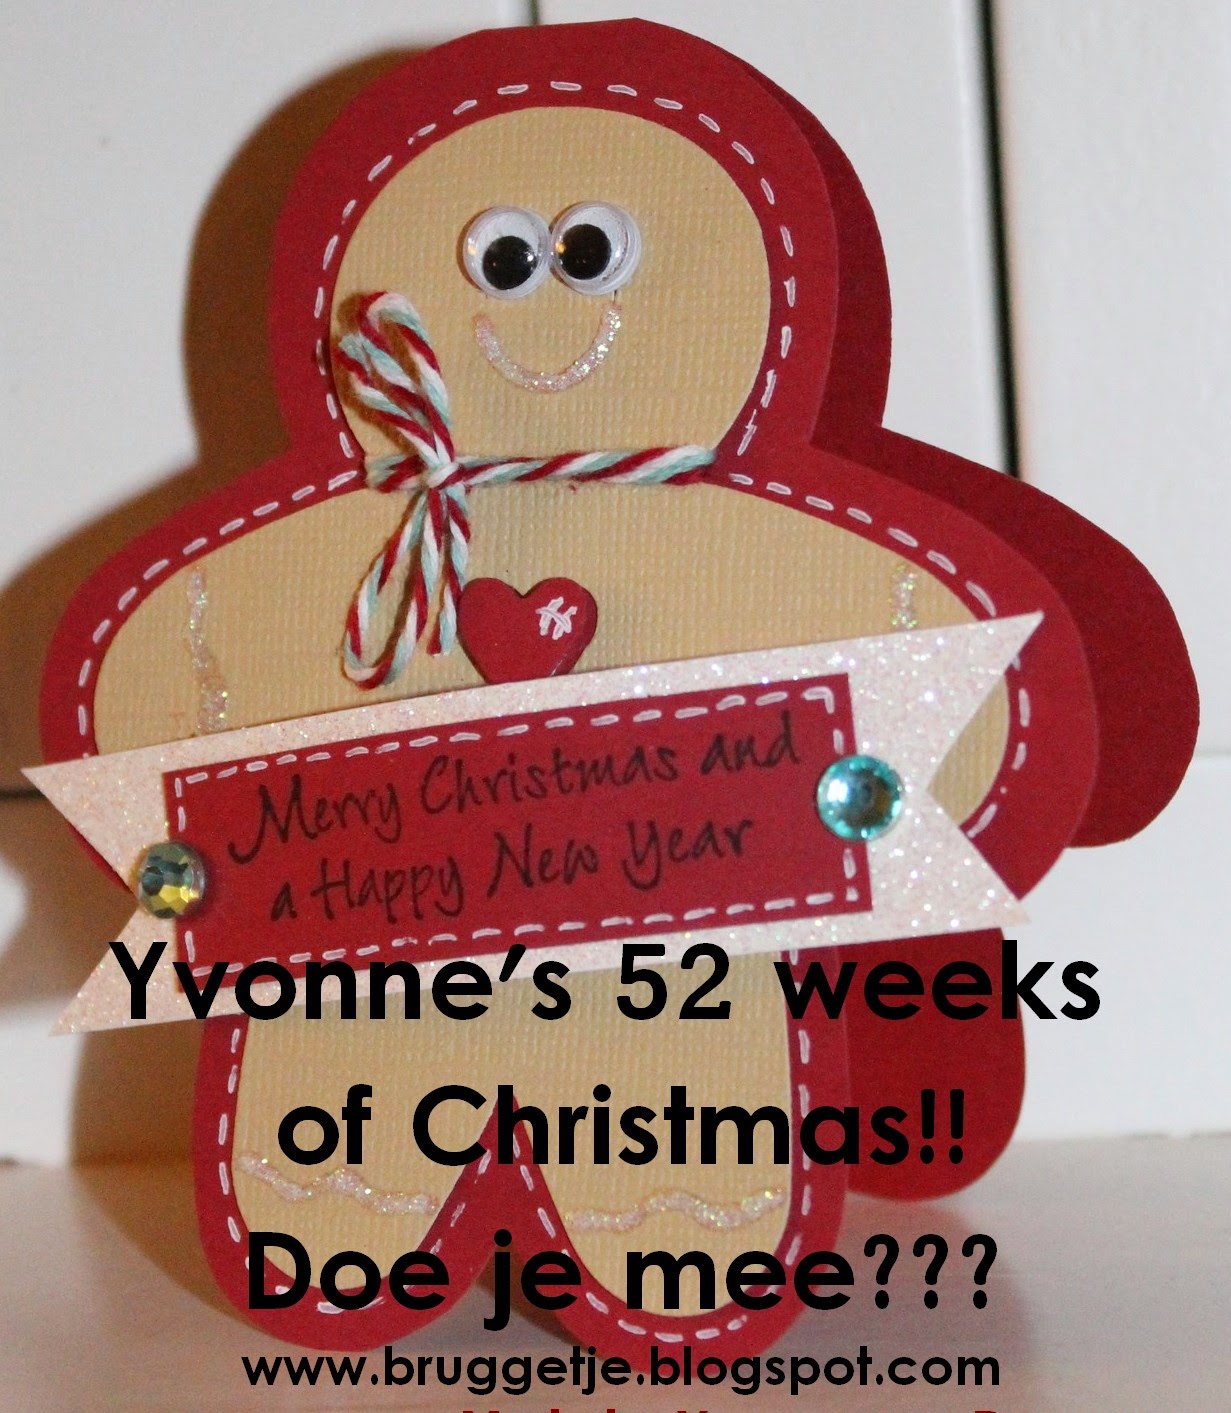 http://www.yvonnes52weeksofchristmas.blogspot.nl/